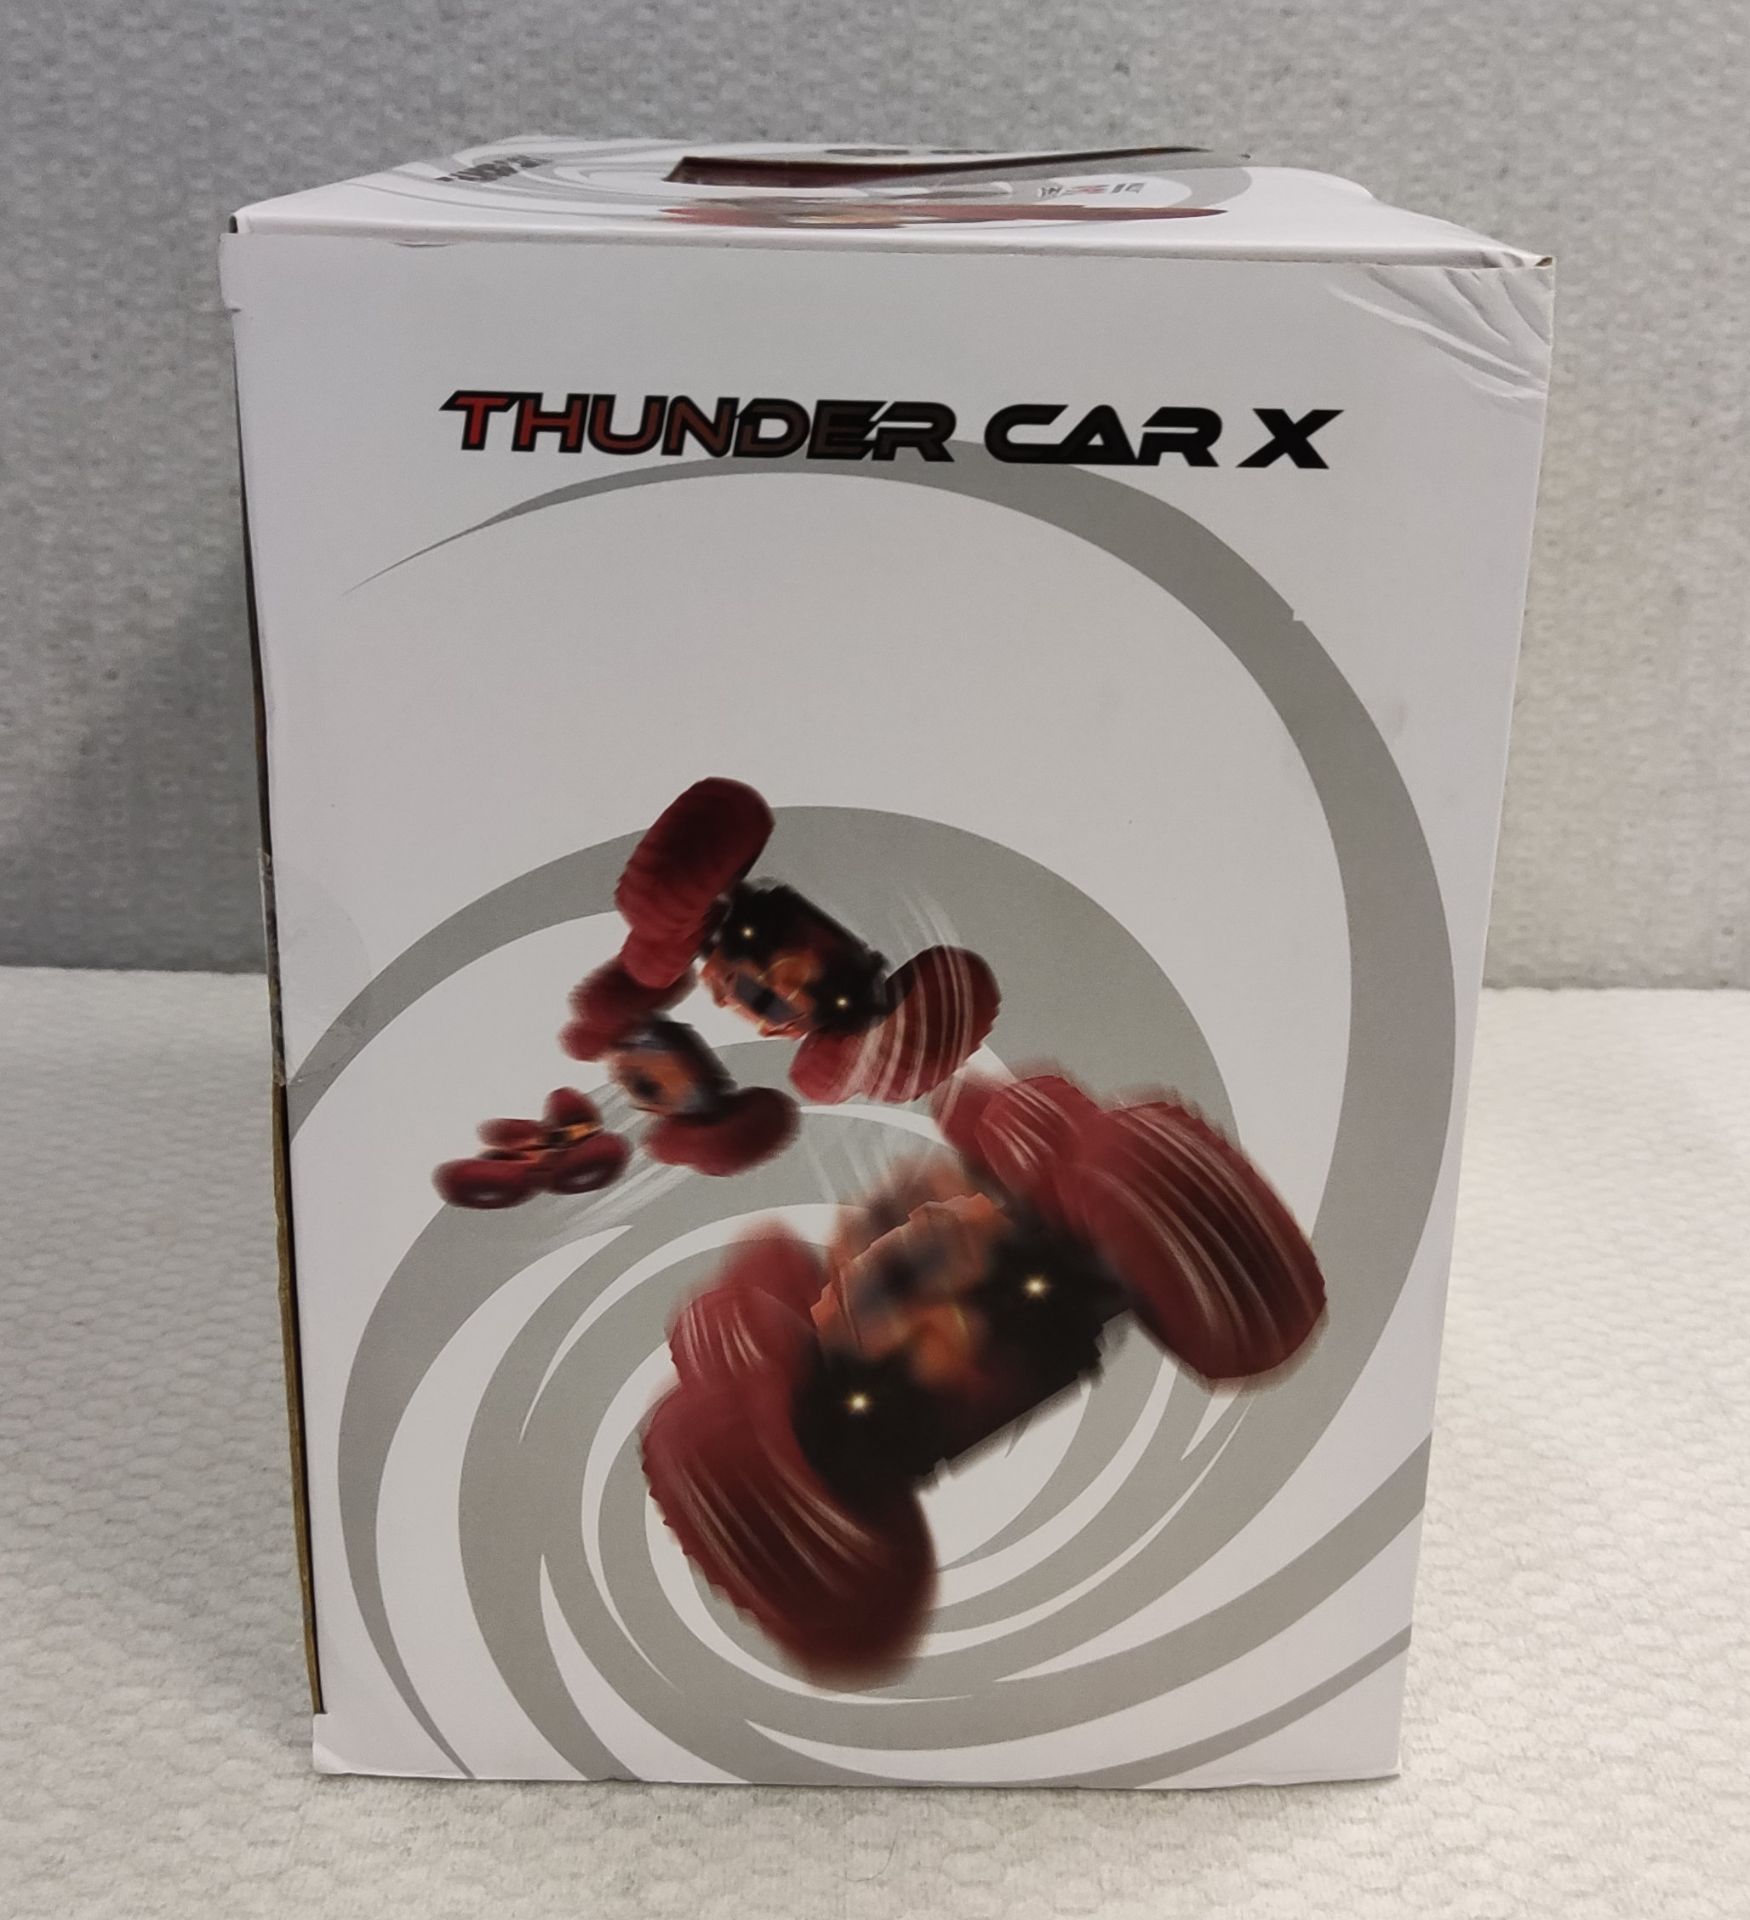 1 x Buzz Toys Thunder Car X R/C Vehicle in Orange - New/Boxed - Image 4 of 8